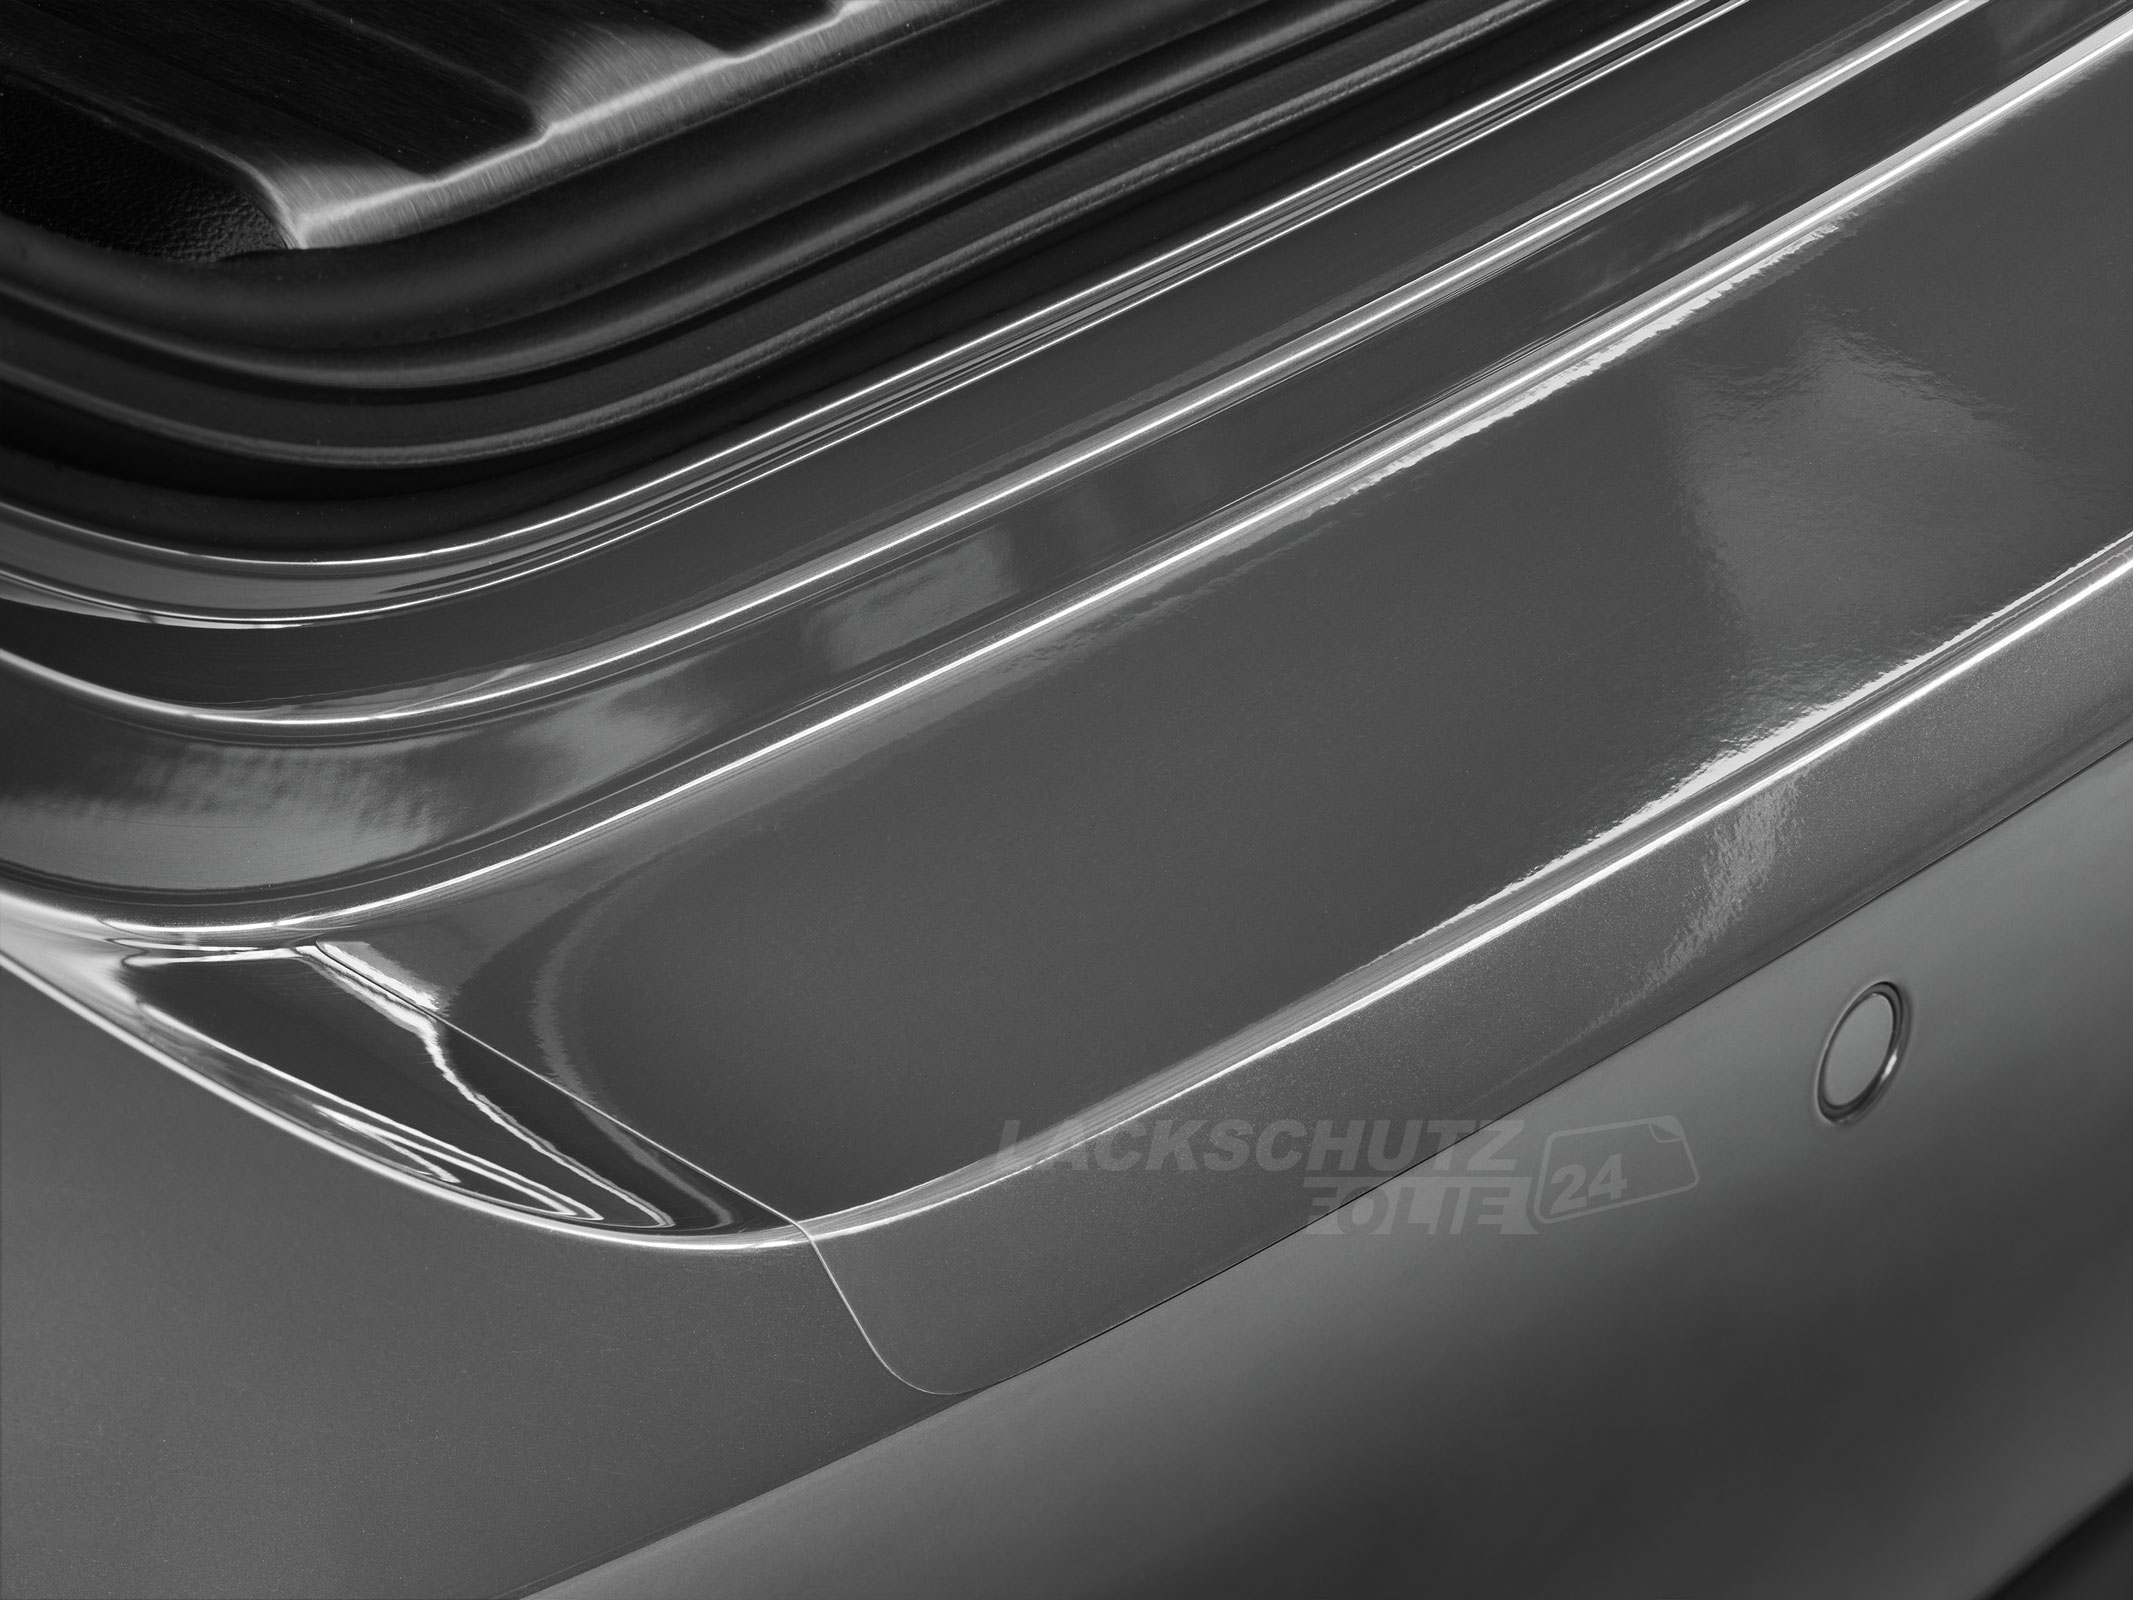 Ladekantenschutzfolie - Transparent Glatt Hochglänzend 150 µm stark für Dacia Sandero Stepway (II) Typ B8, BJ 2013-2020 